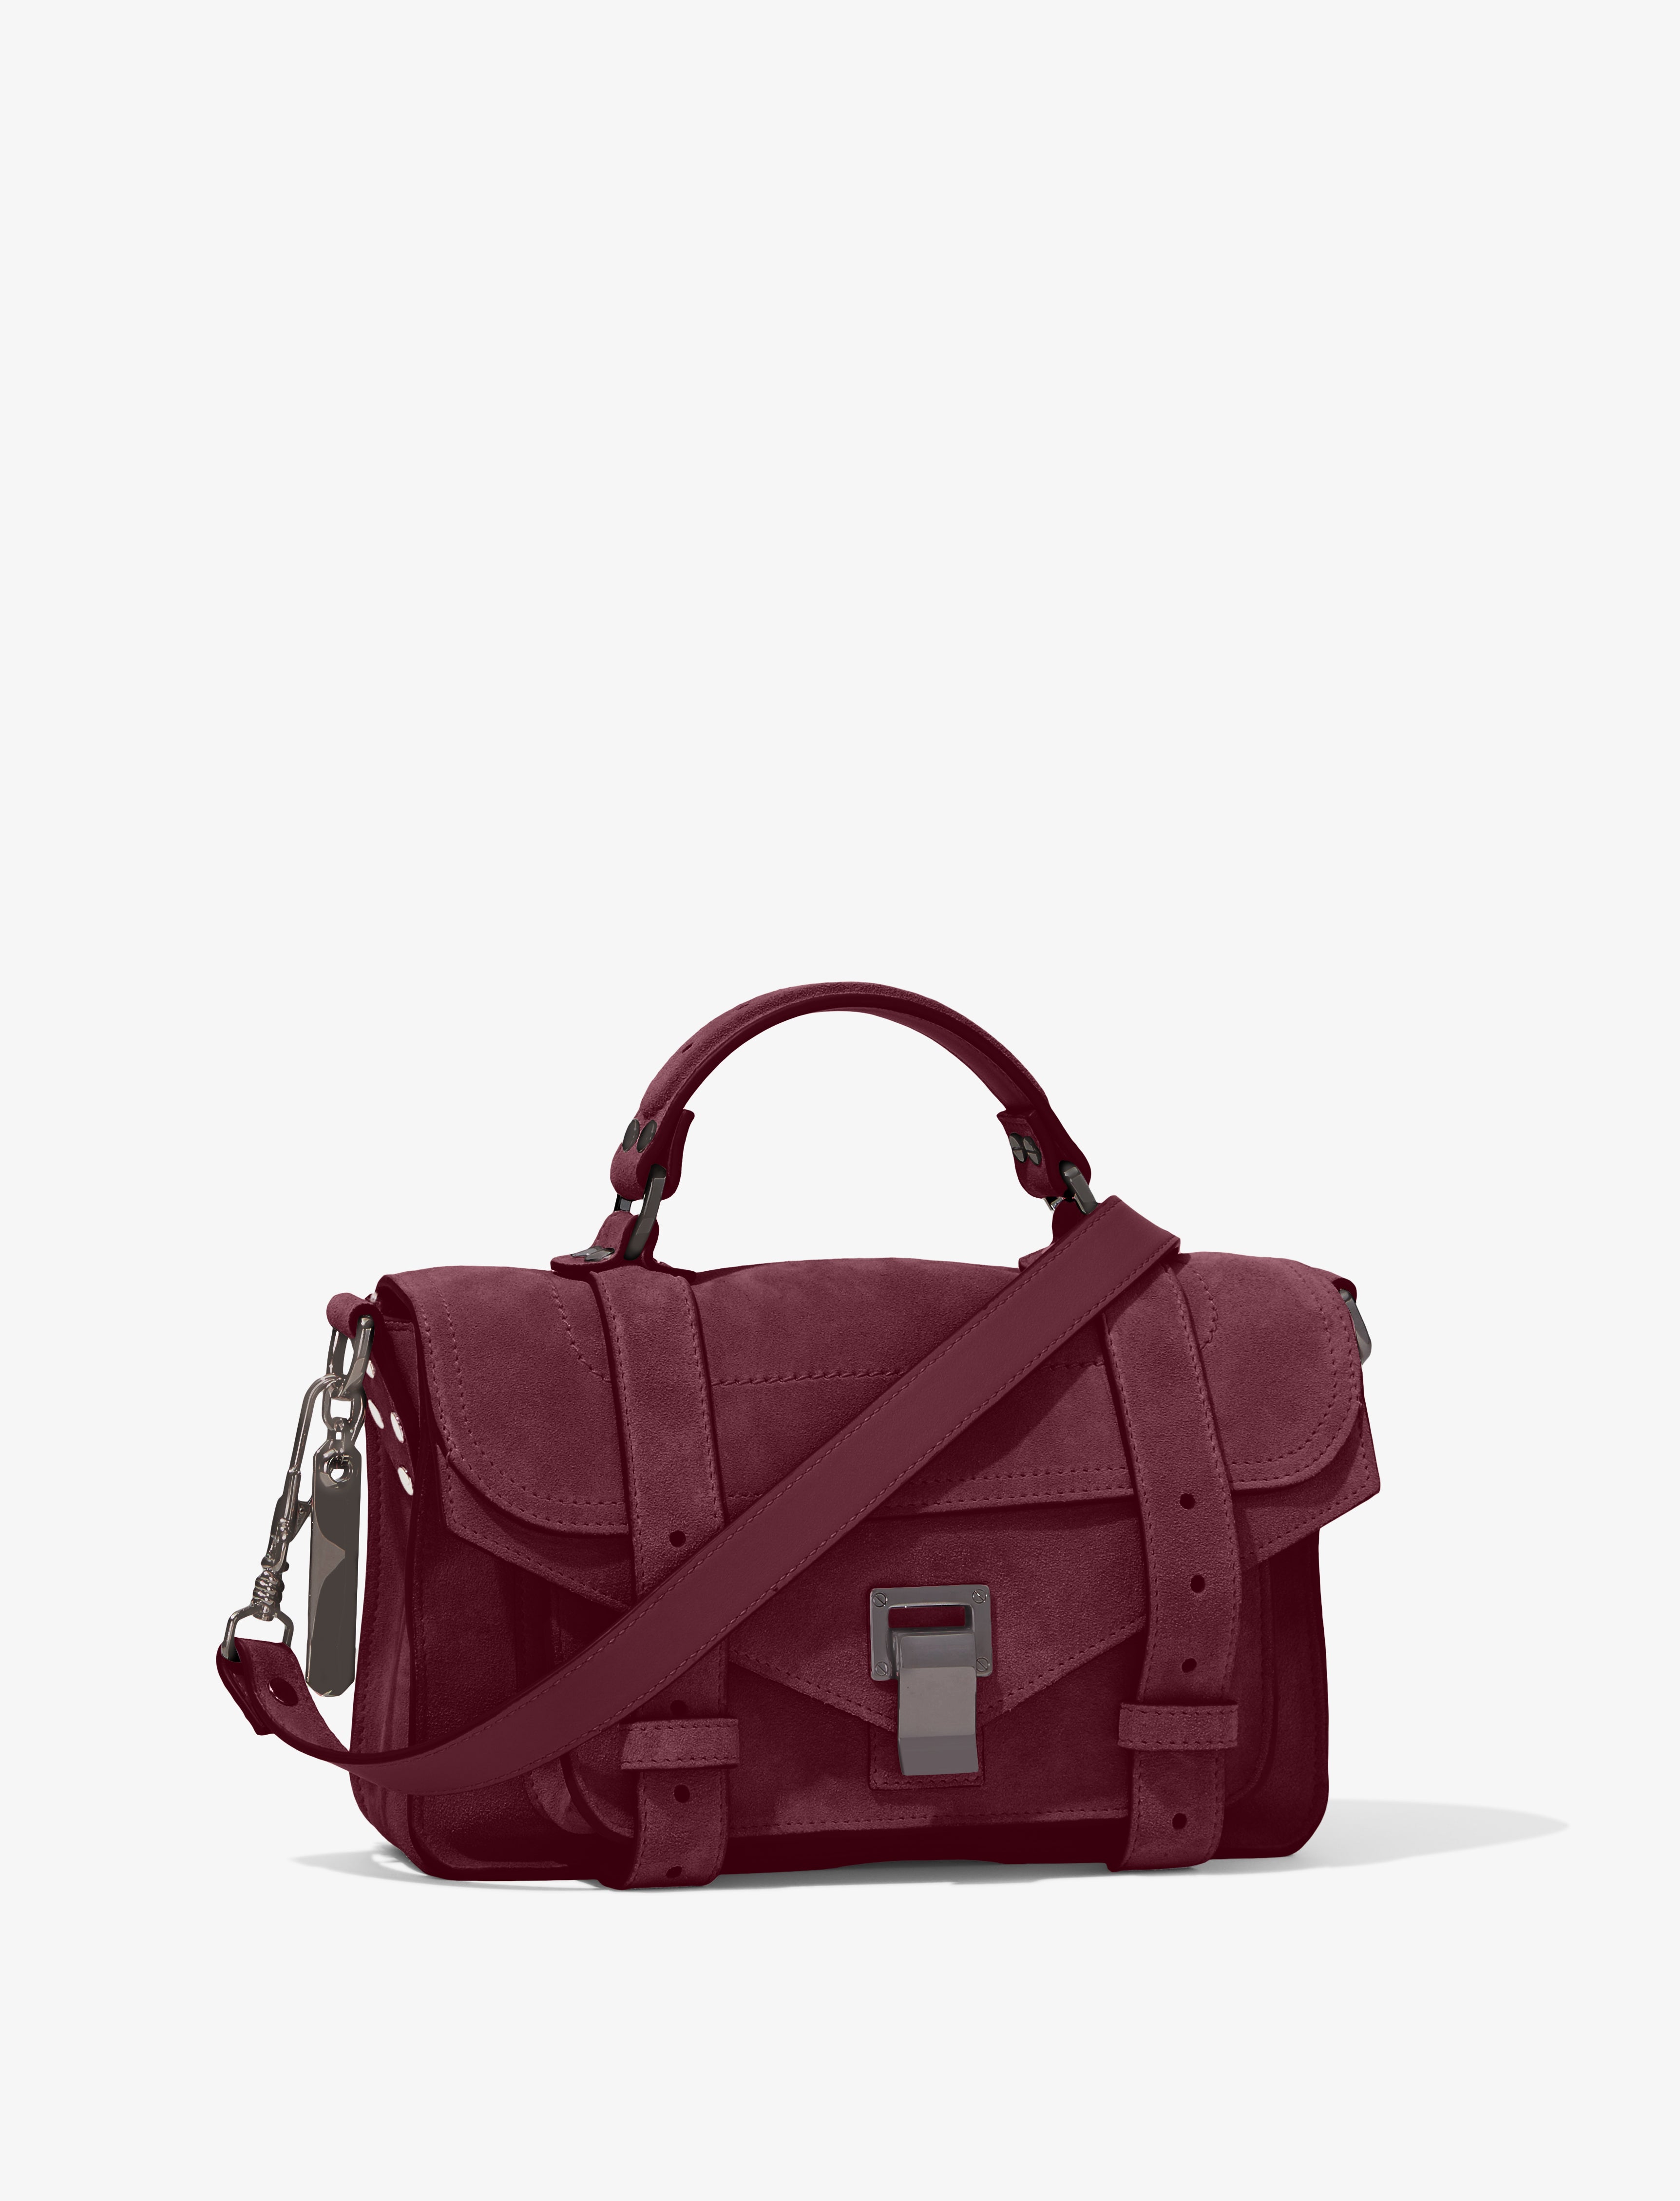 Shop PS1 Bags | Proenza Schouler - Official Site